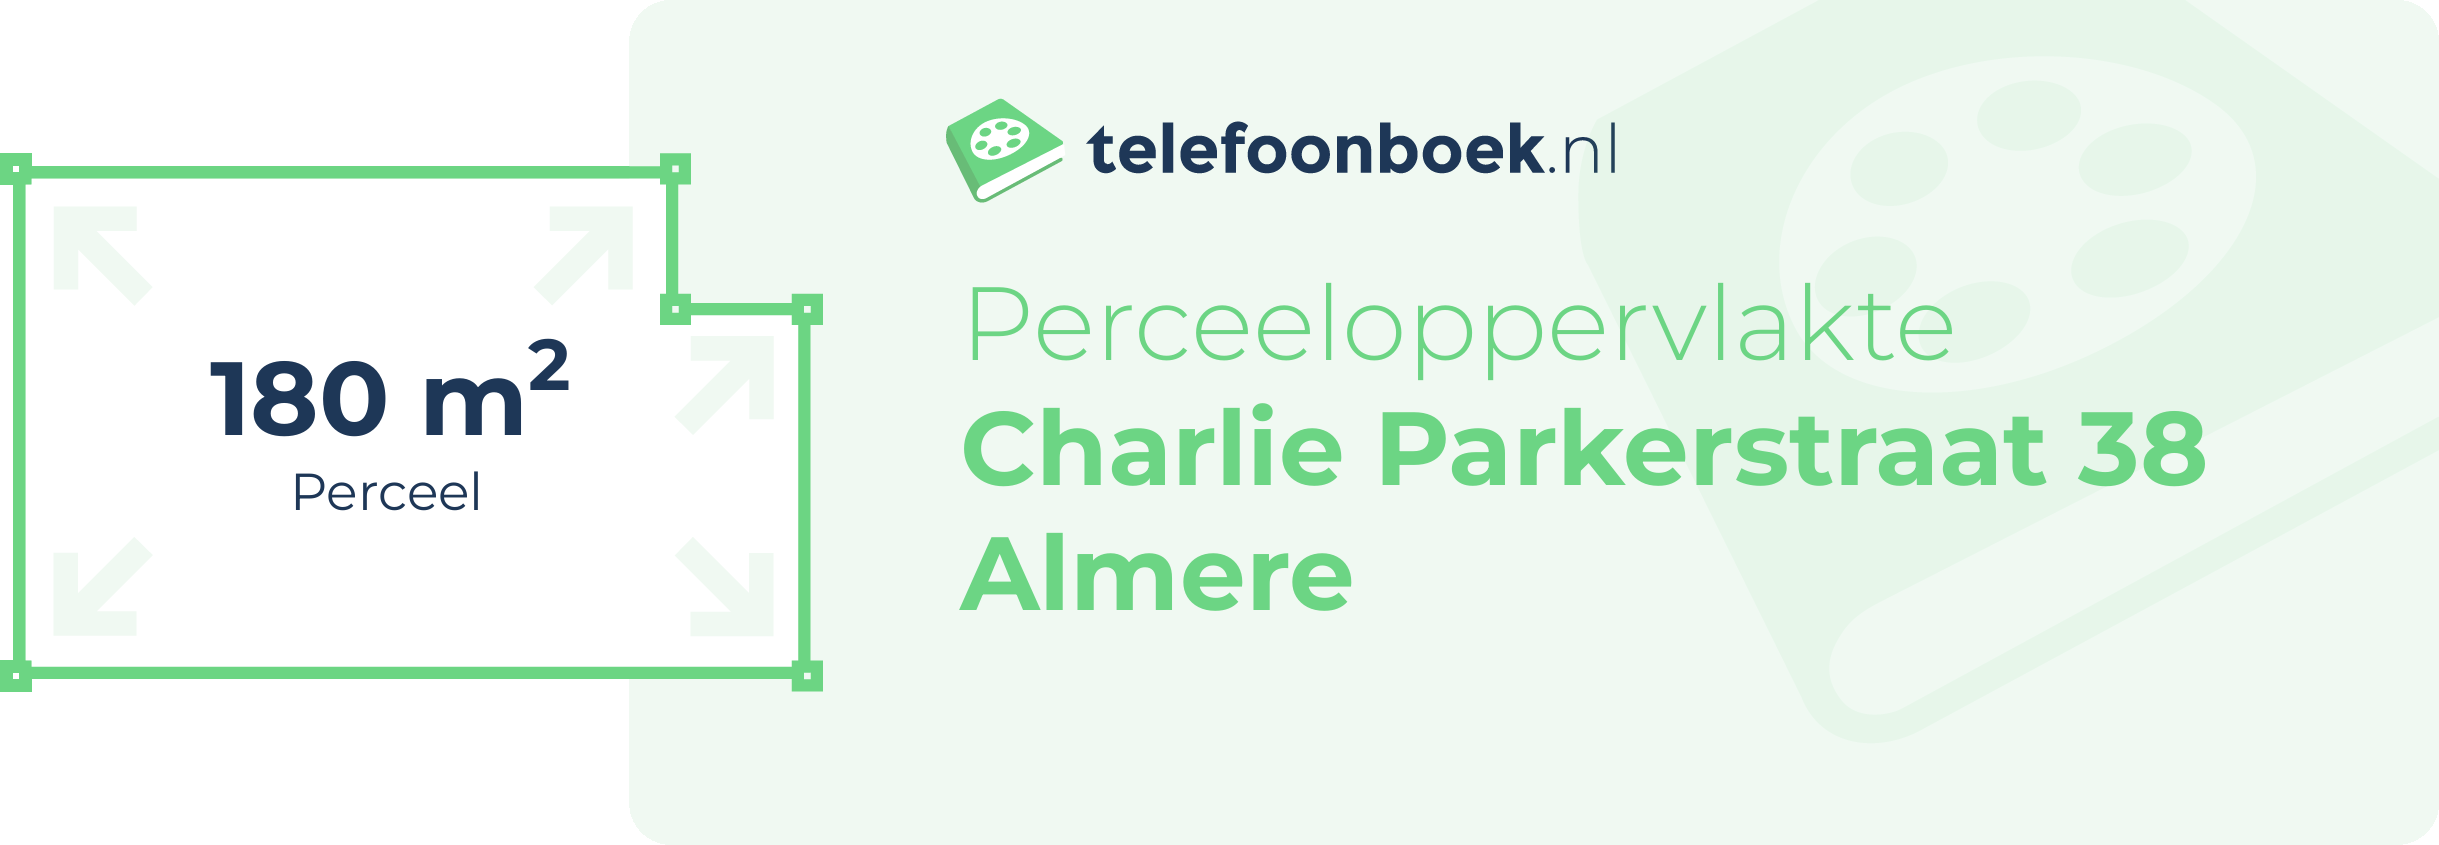 Perceeloppervlakte Charlie Parkerstraat 38 Almere